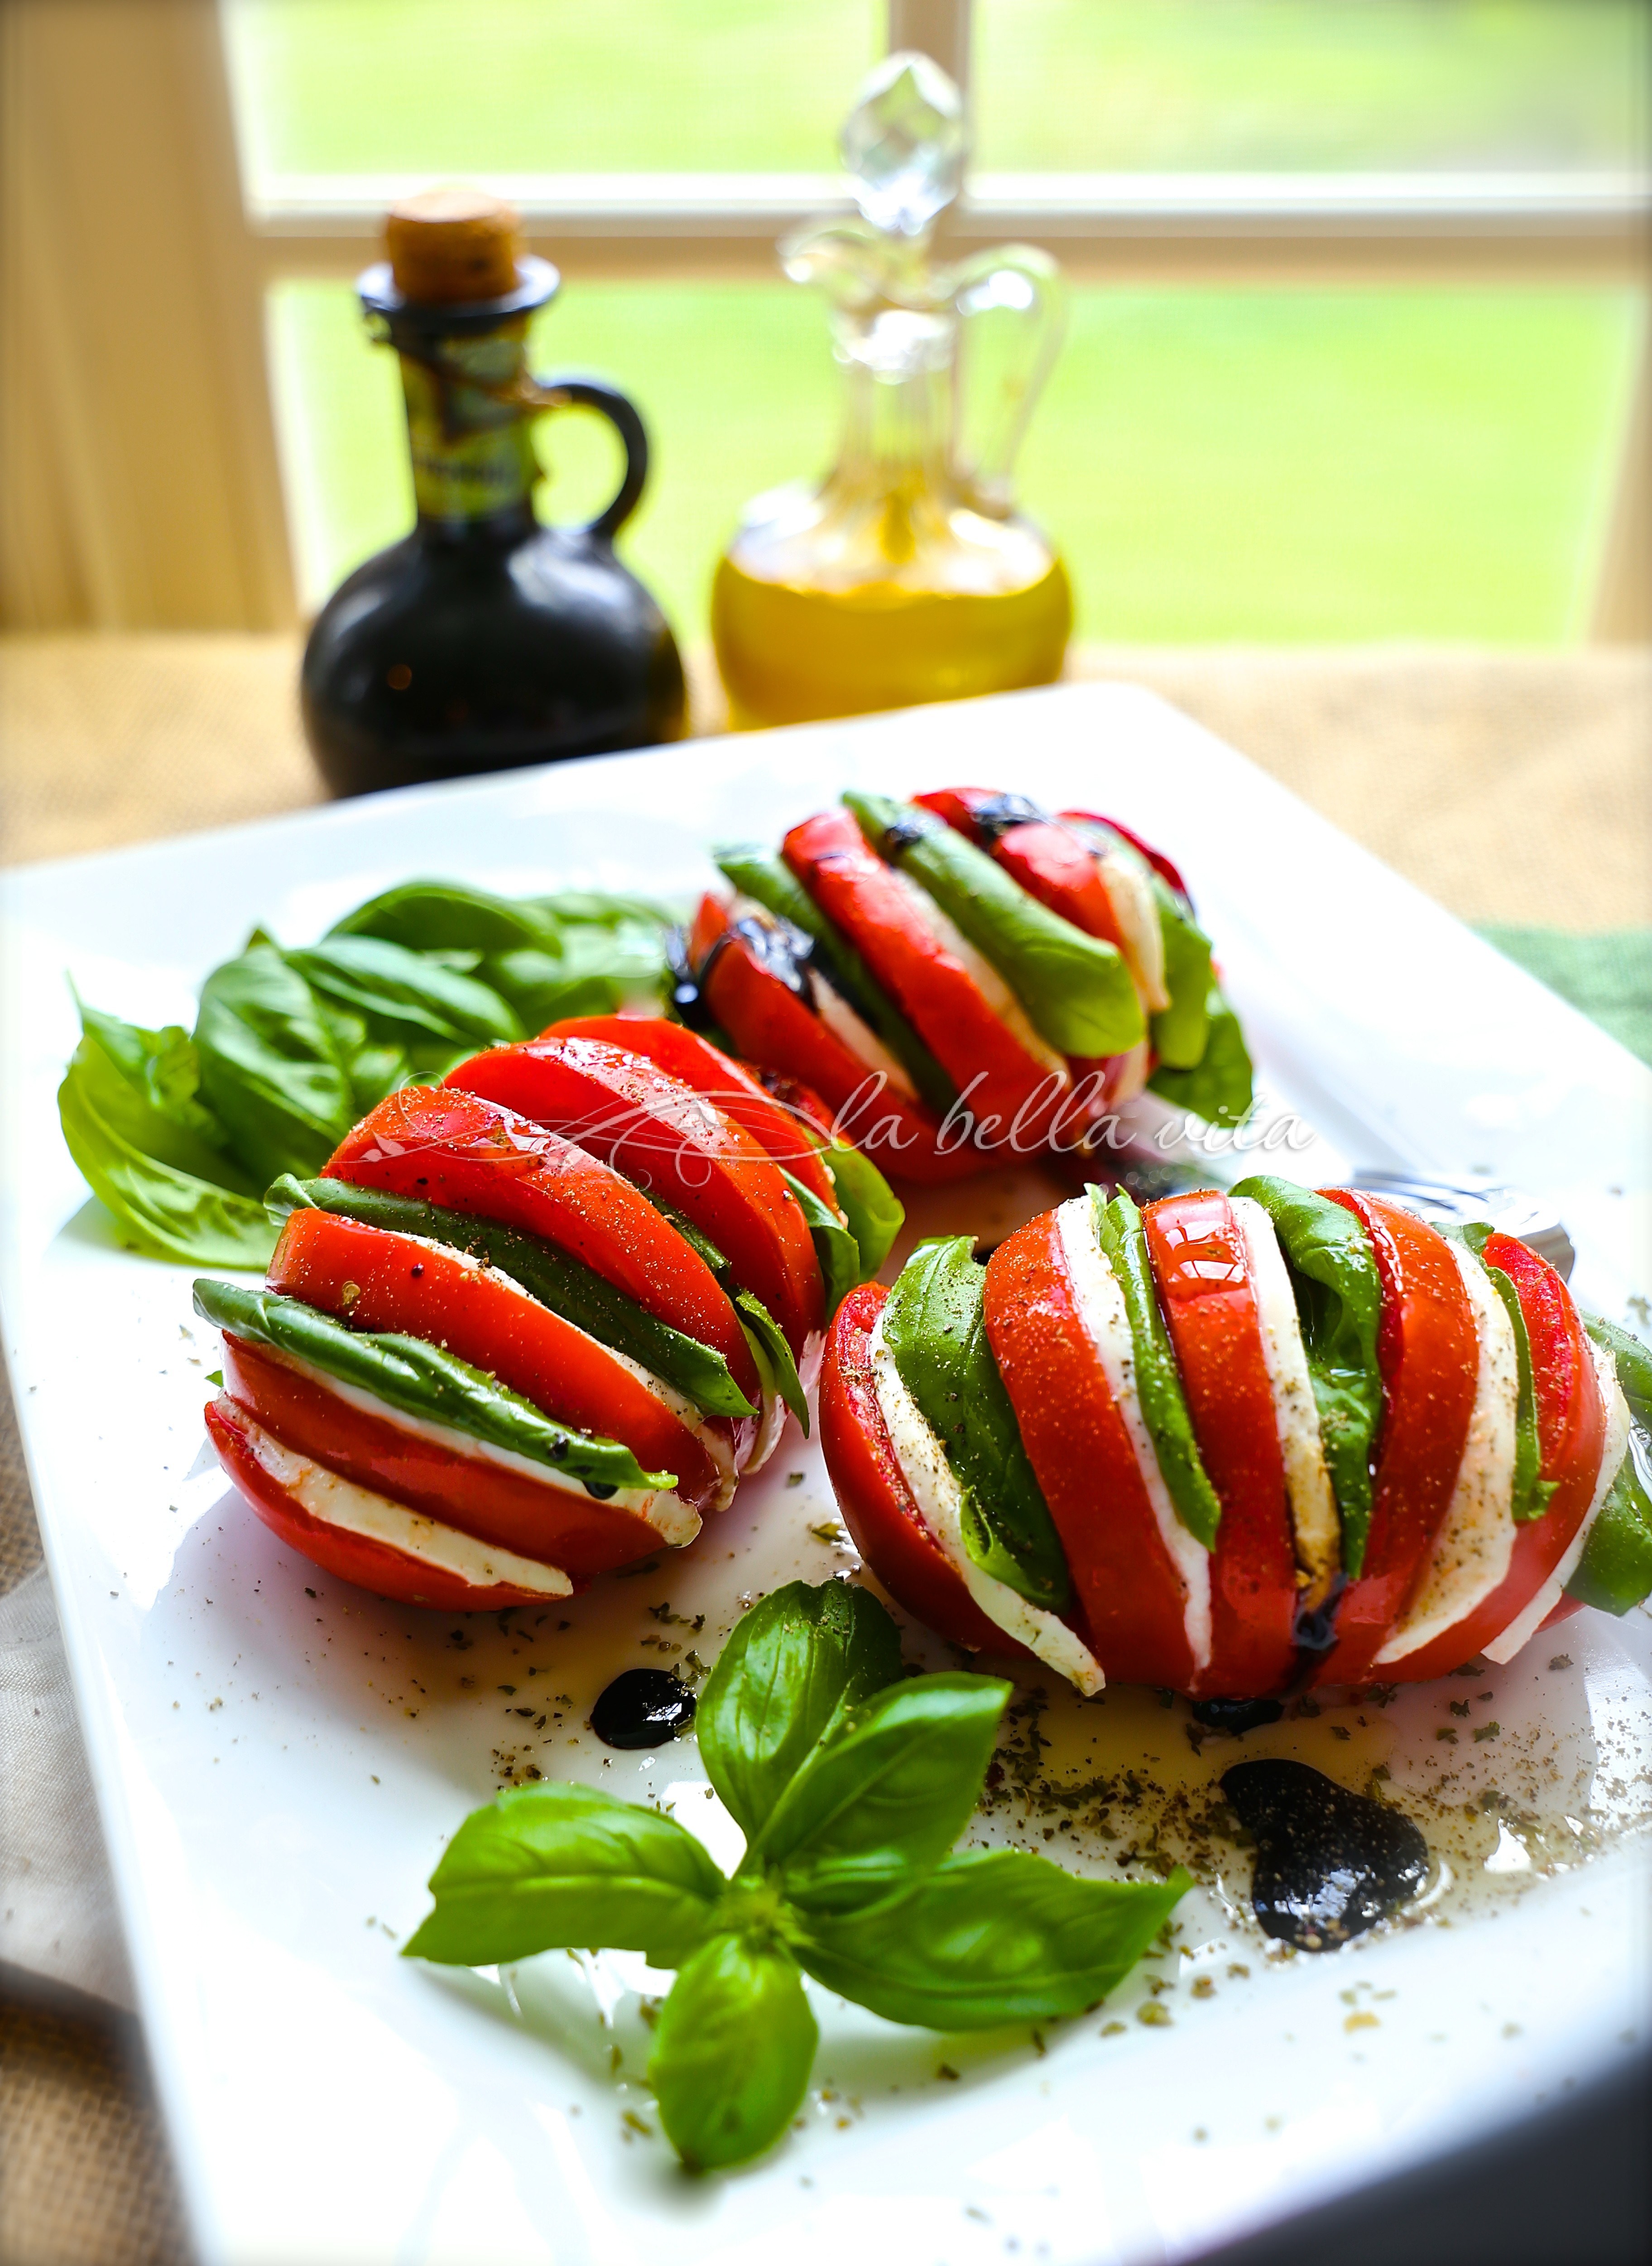 Caprese Salad with a Fresh New Presentation from La Bella Vita Cucina